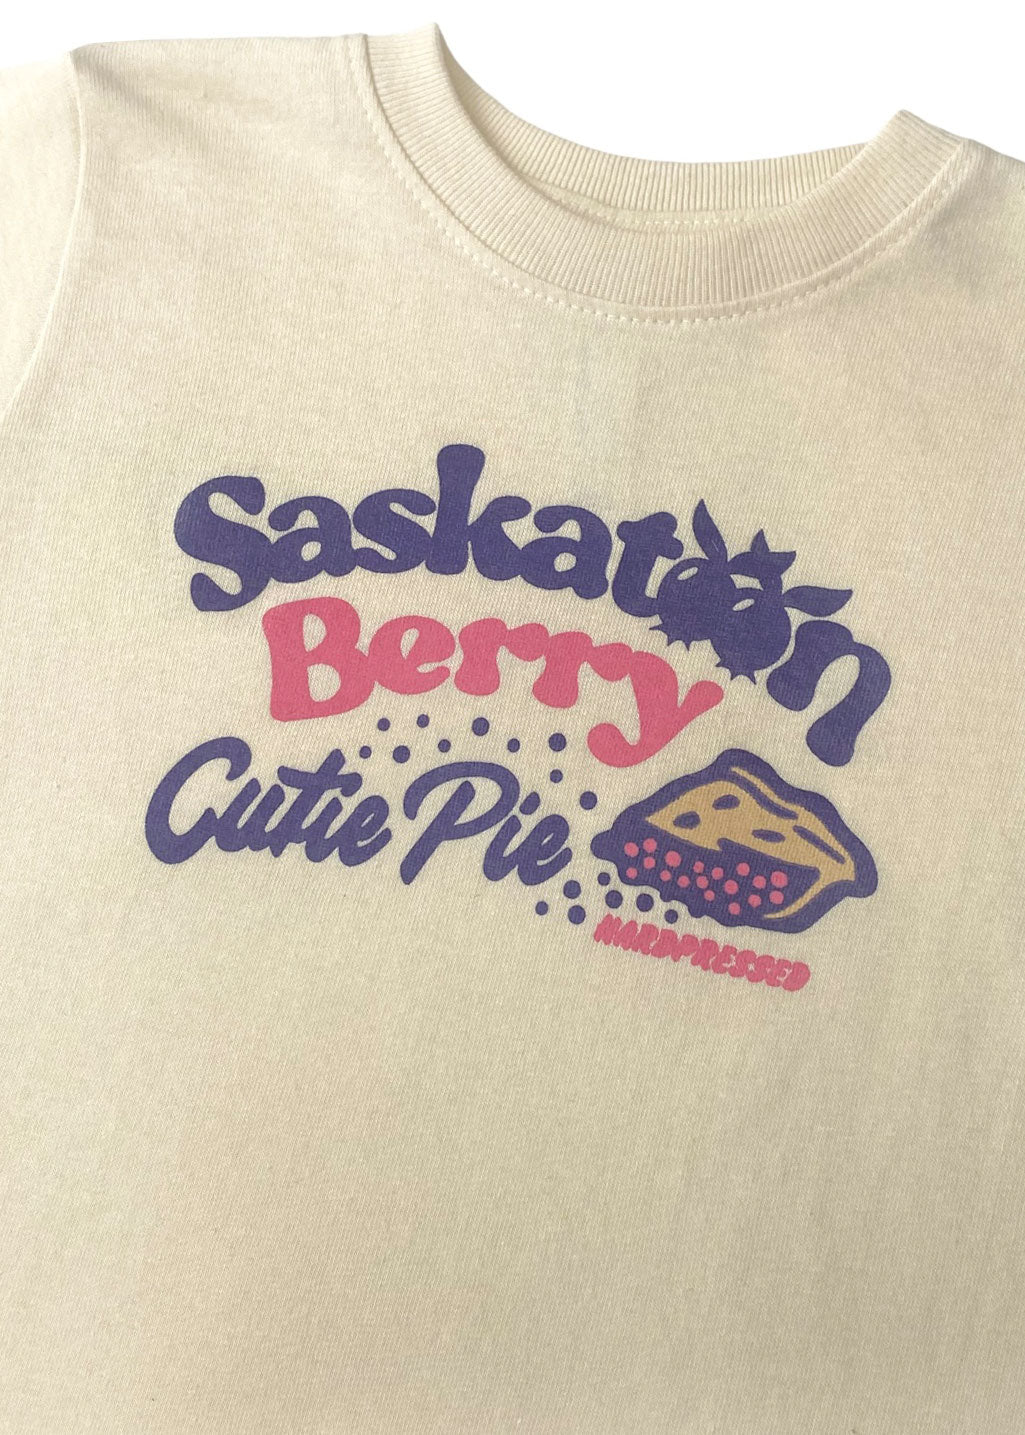 Saskatoon Berry Cutie Pie Tee | Butter | Kids - Hardpressed Print Studio Inc.